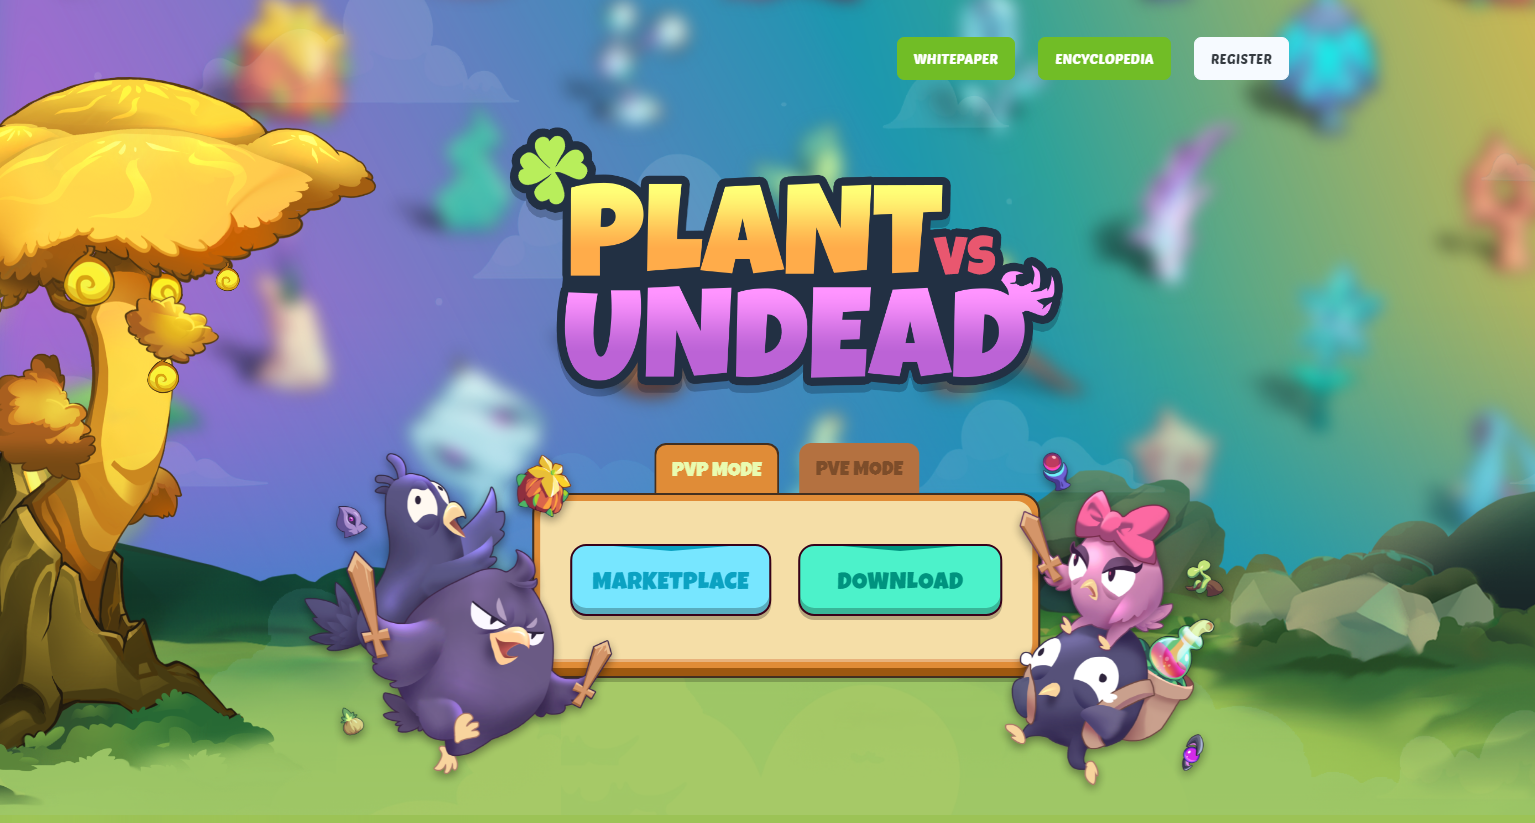 Plants vs Undead - Wiki